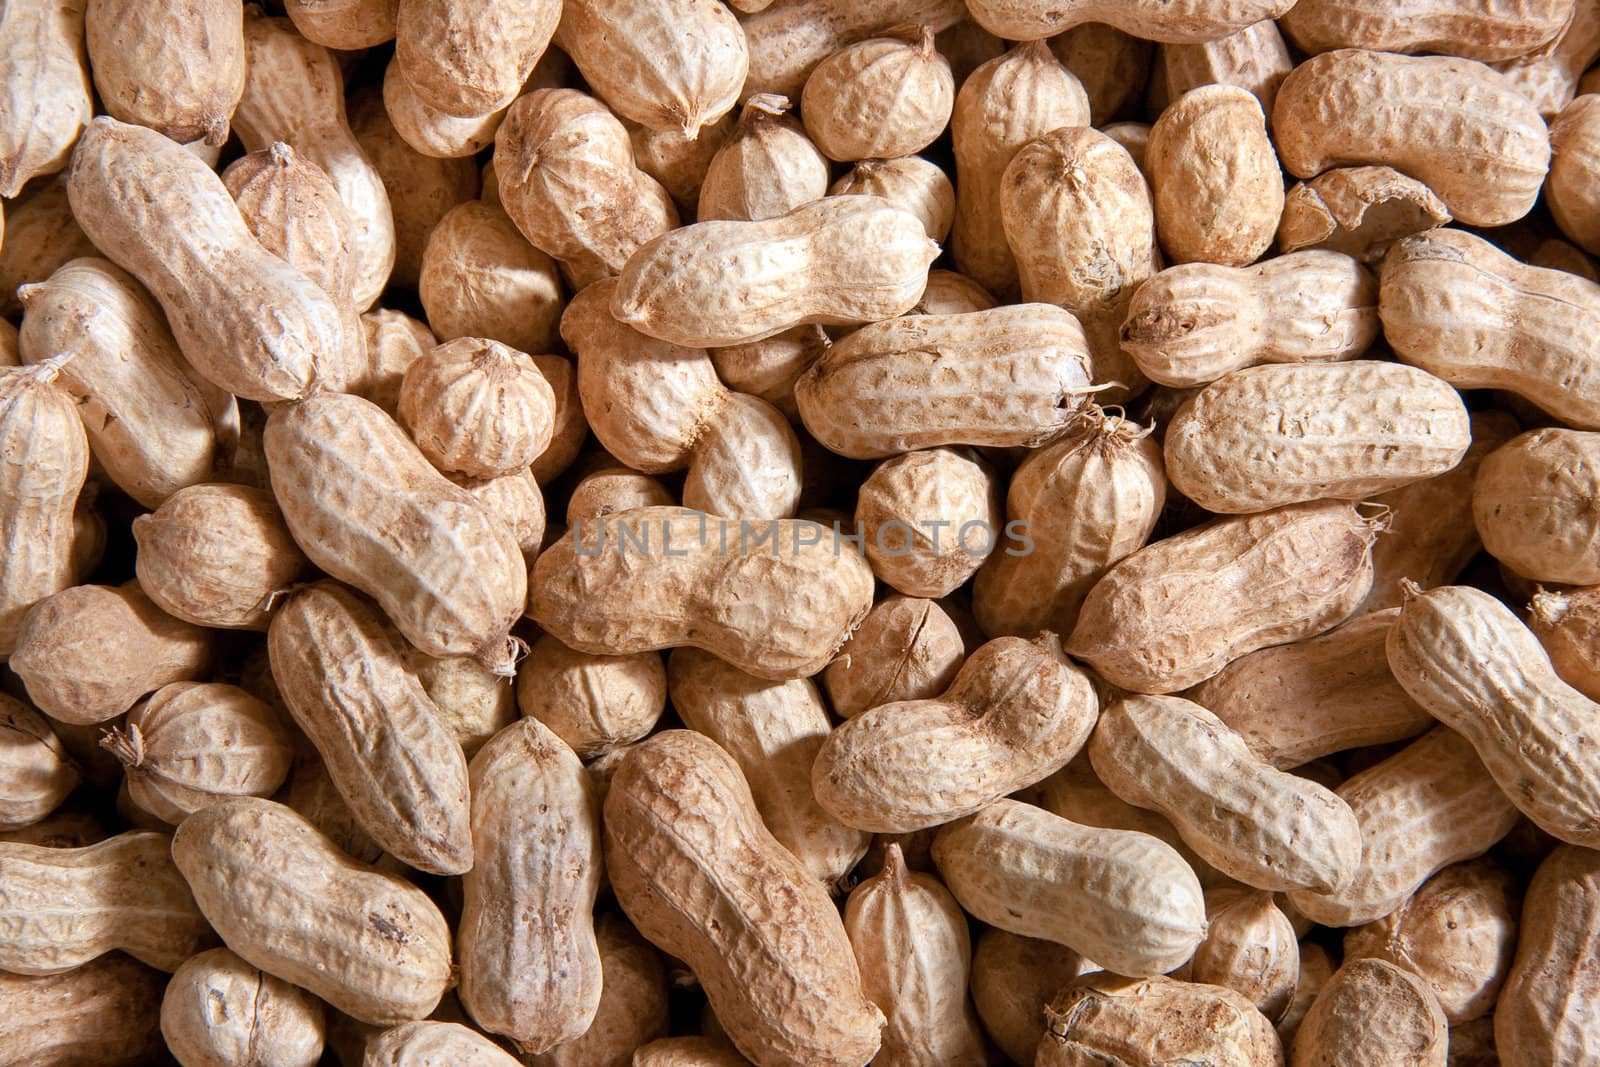 Peanuts in shells by raliand